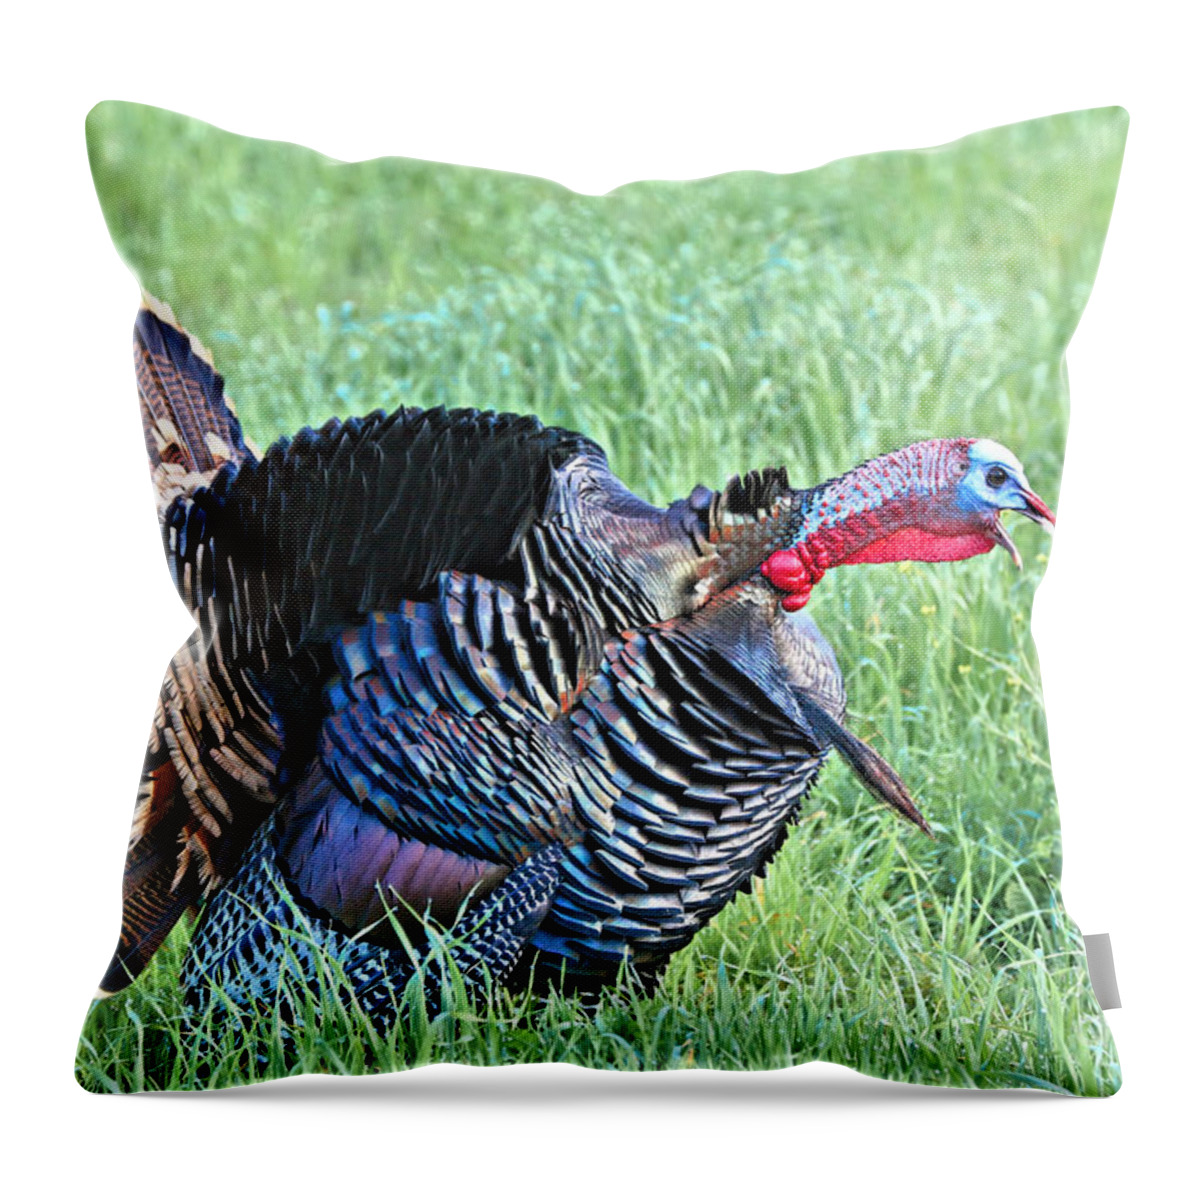 Turkey Throw Pillow featuring the photograph Wild Turkey by Vivian Krug Cotton